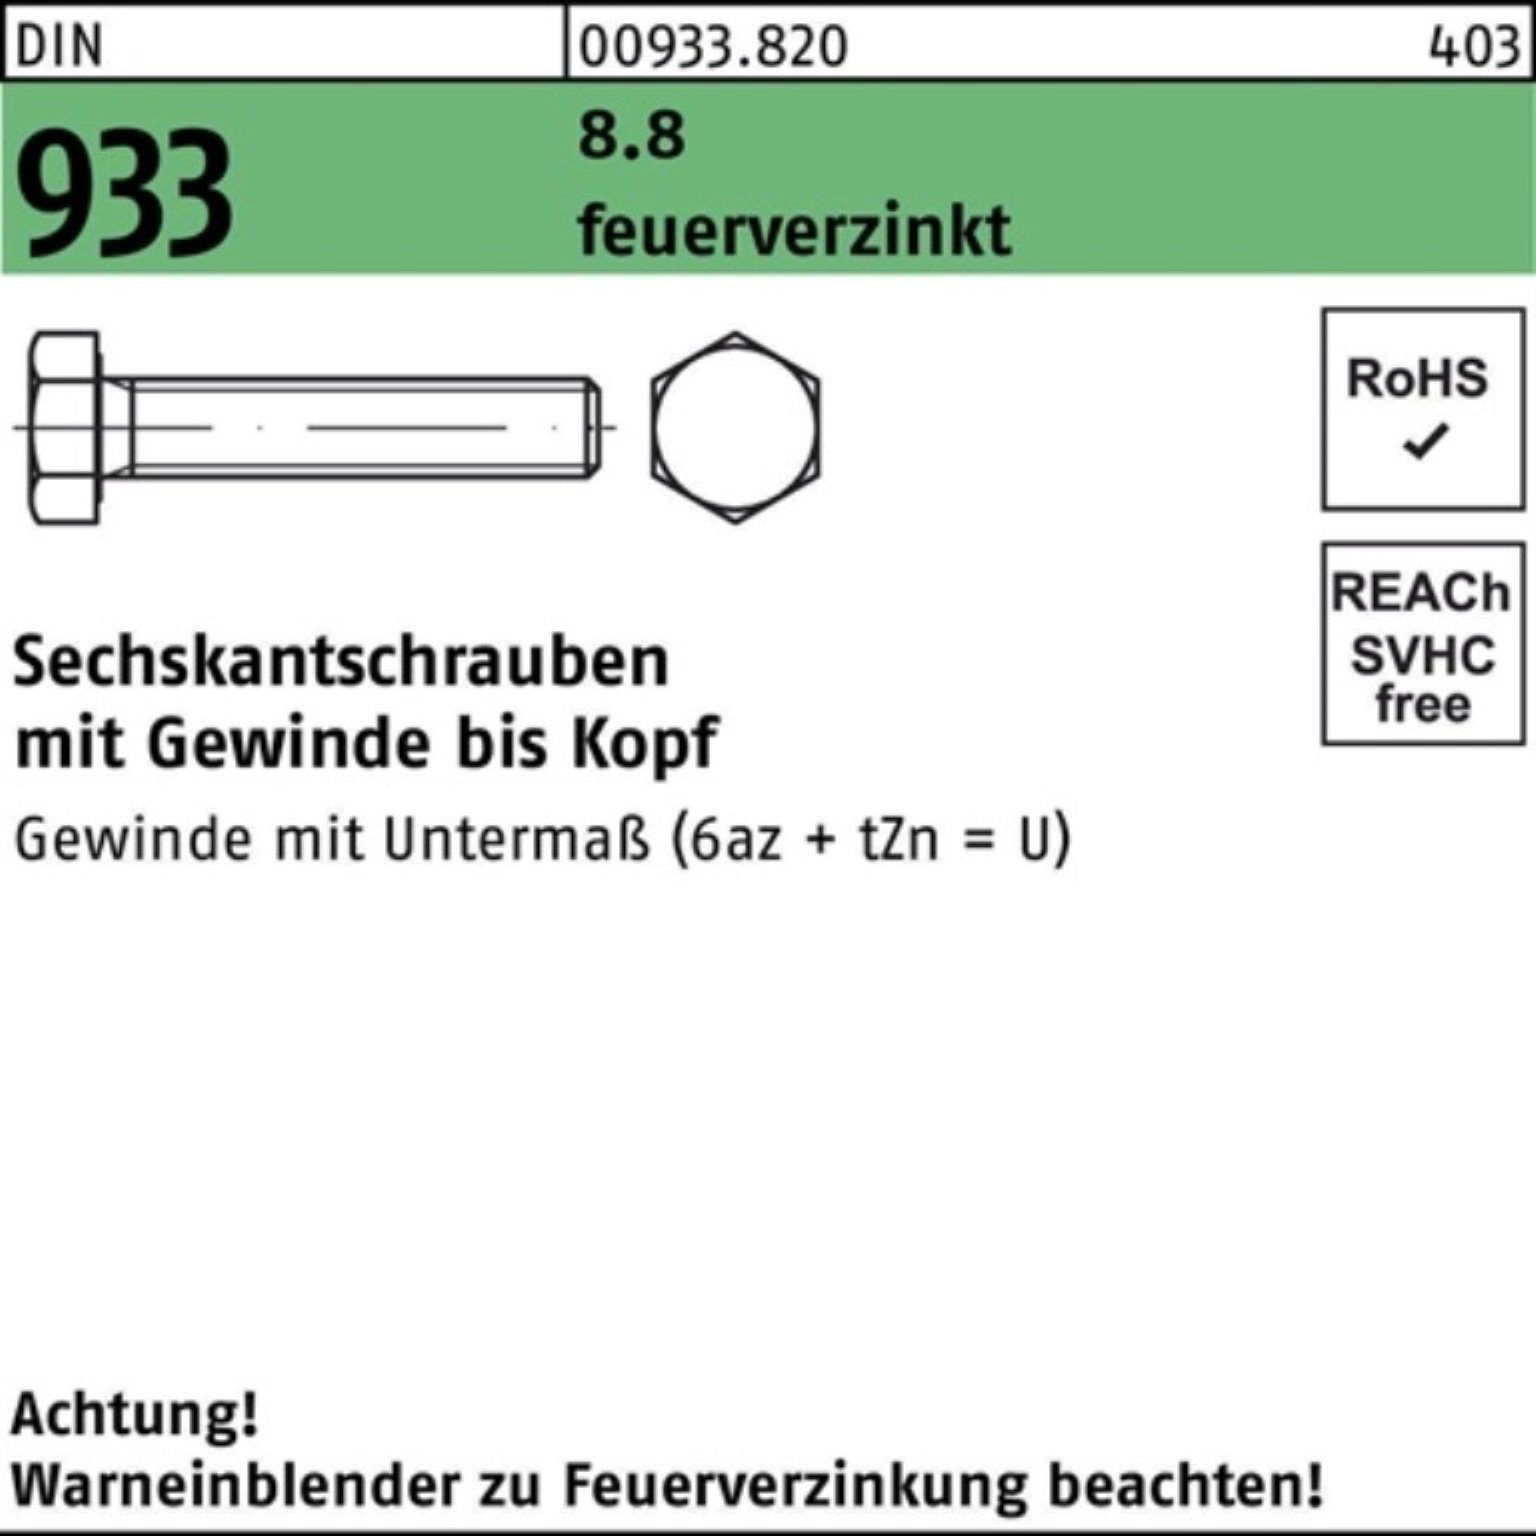 933 St 100er DIN Pack VG 45 Sechskantschraube Reyher 8.8 feuerverz. 100 Sechskantschraube M10x